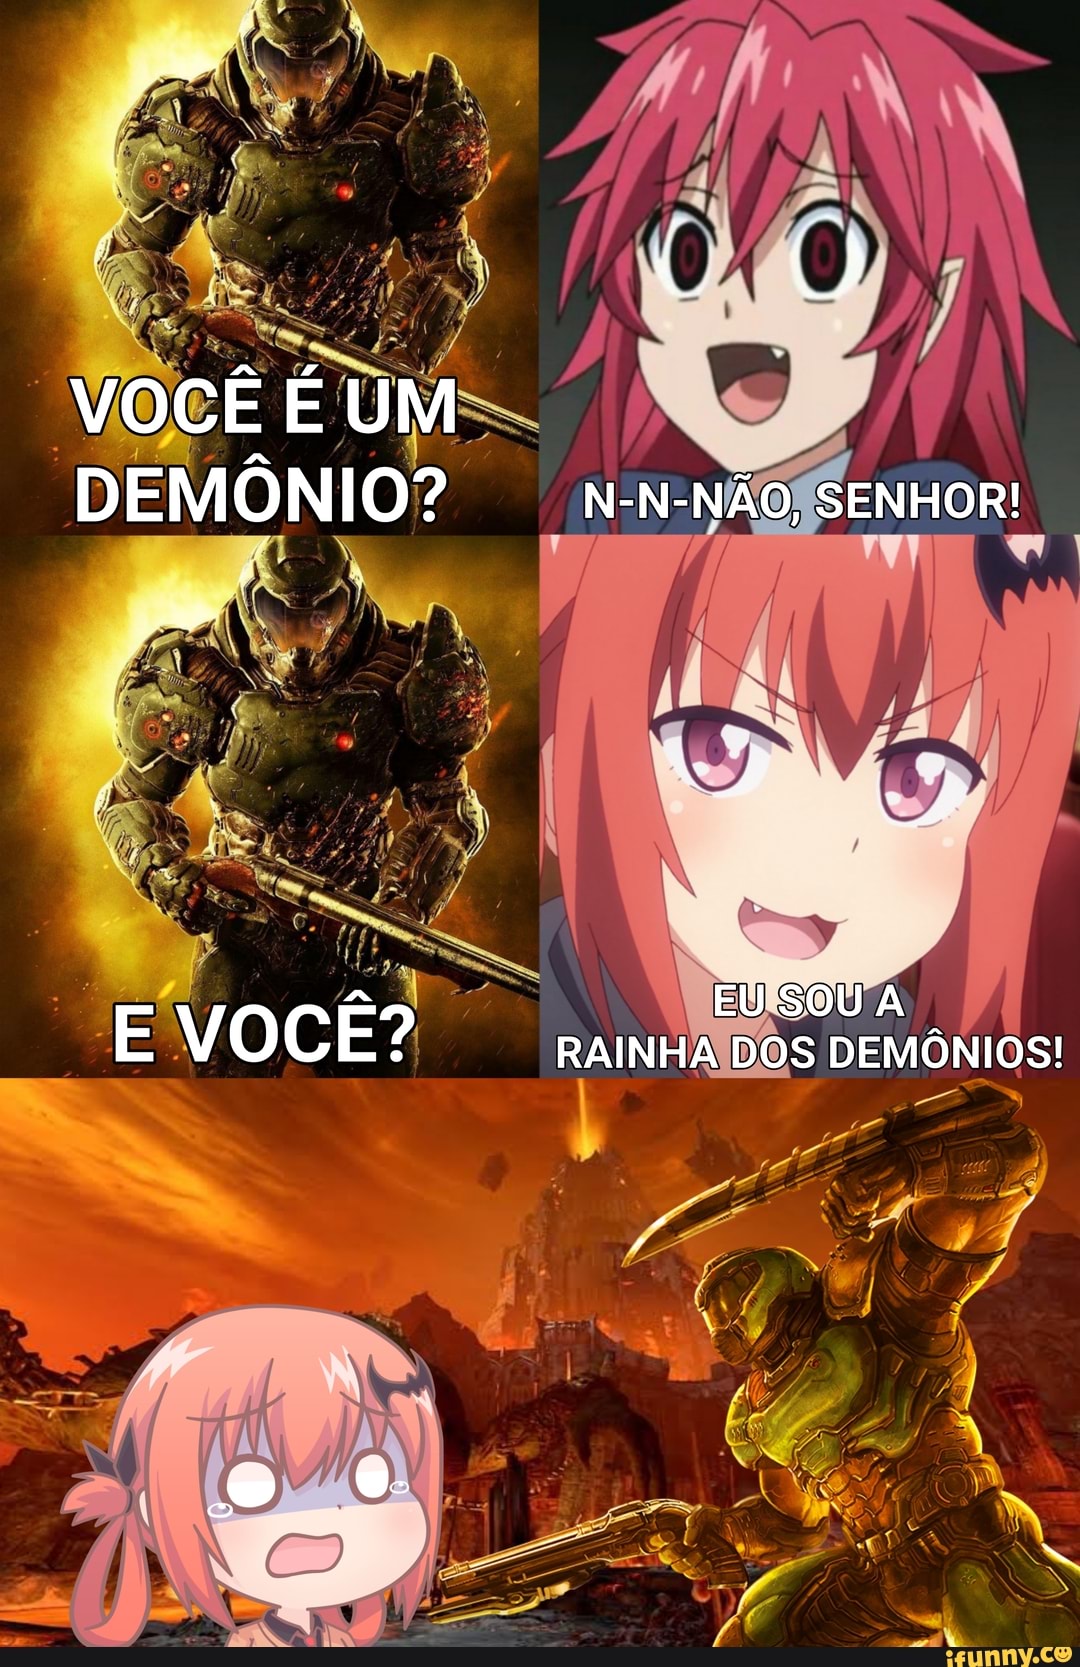 Rei Demônio Em Video games I Rel Demônio em Animes - iFunny Brazil